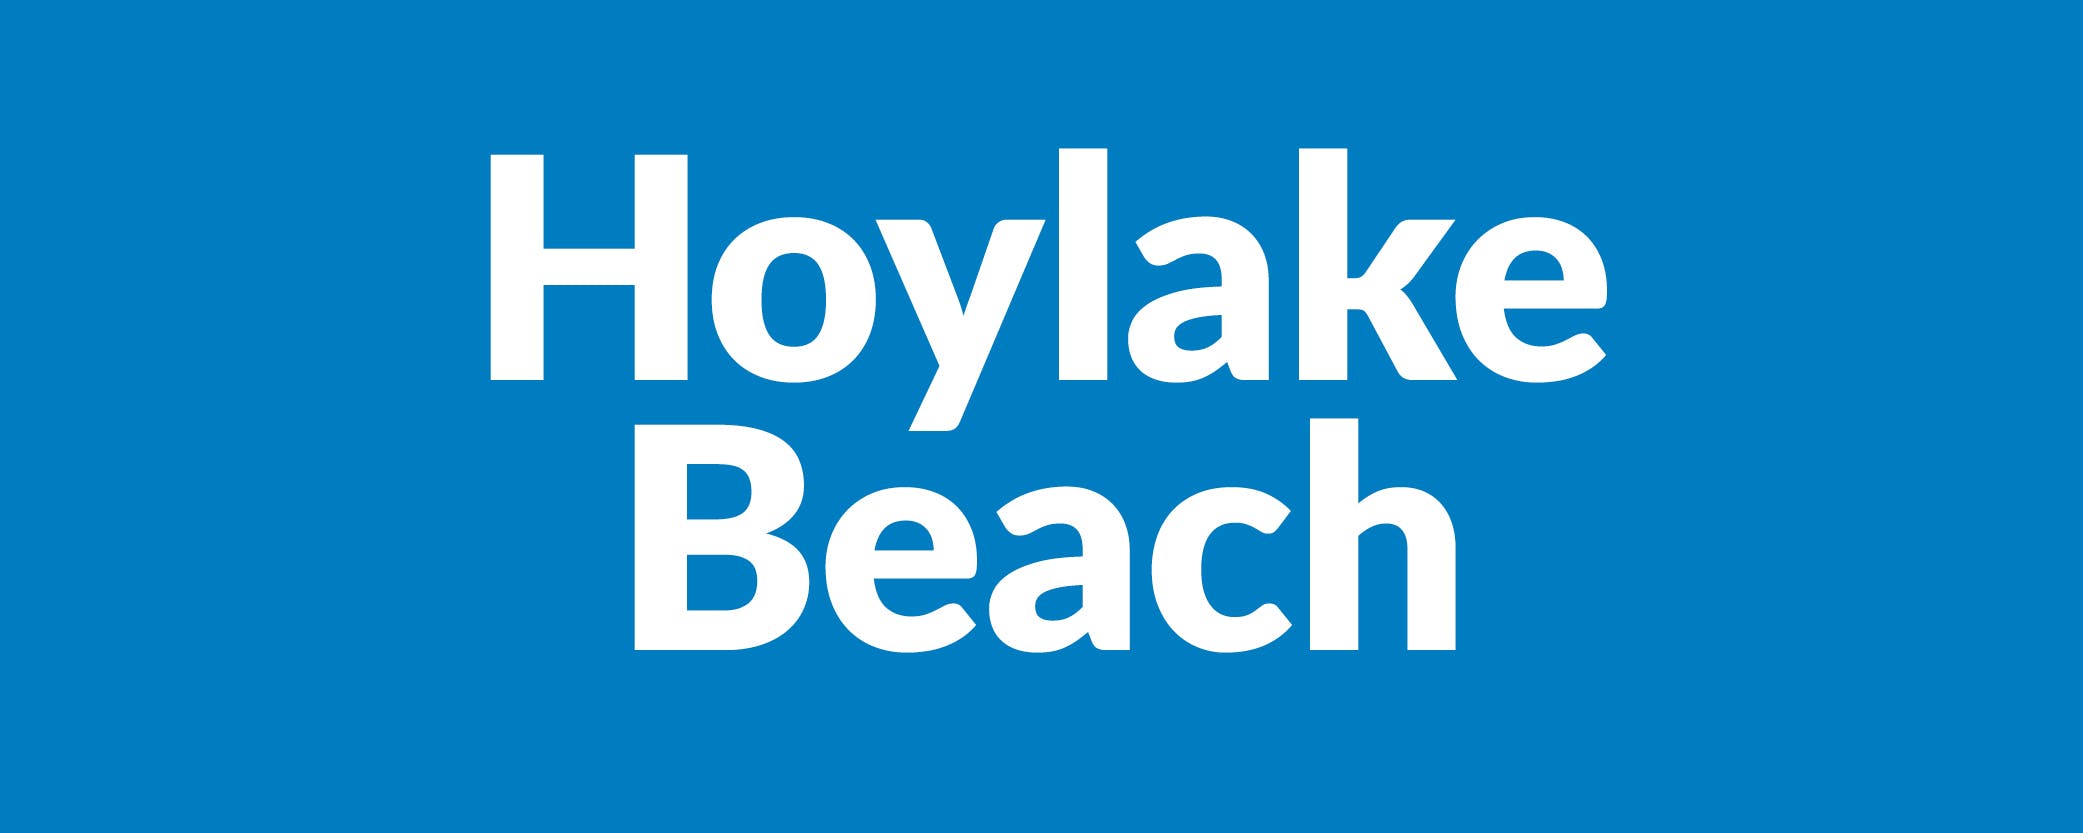 Hoylake Beach text